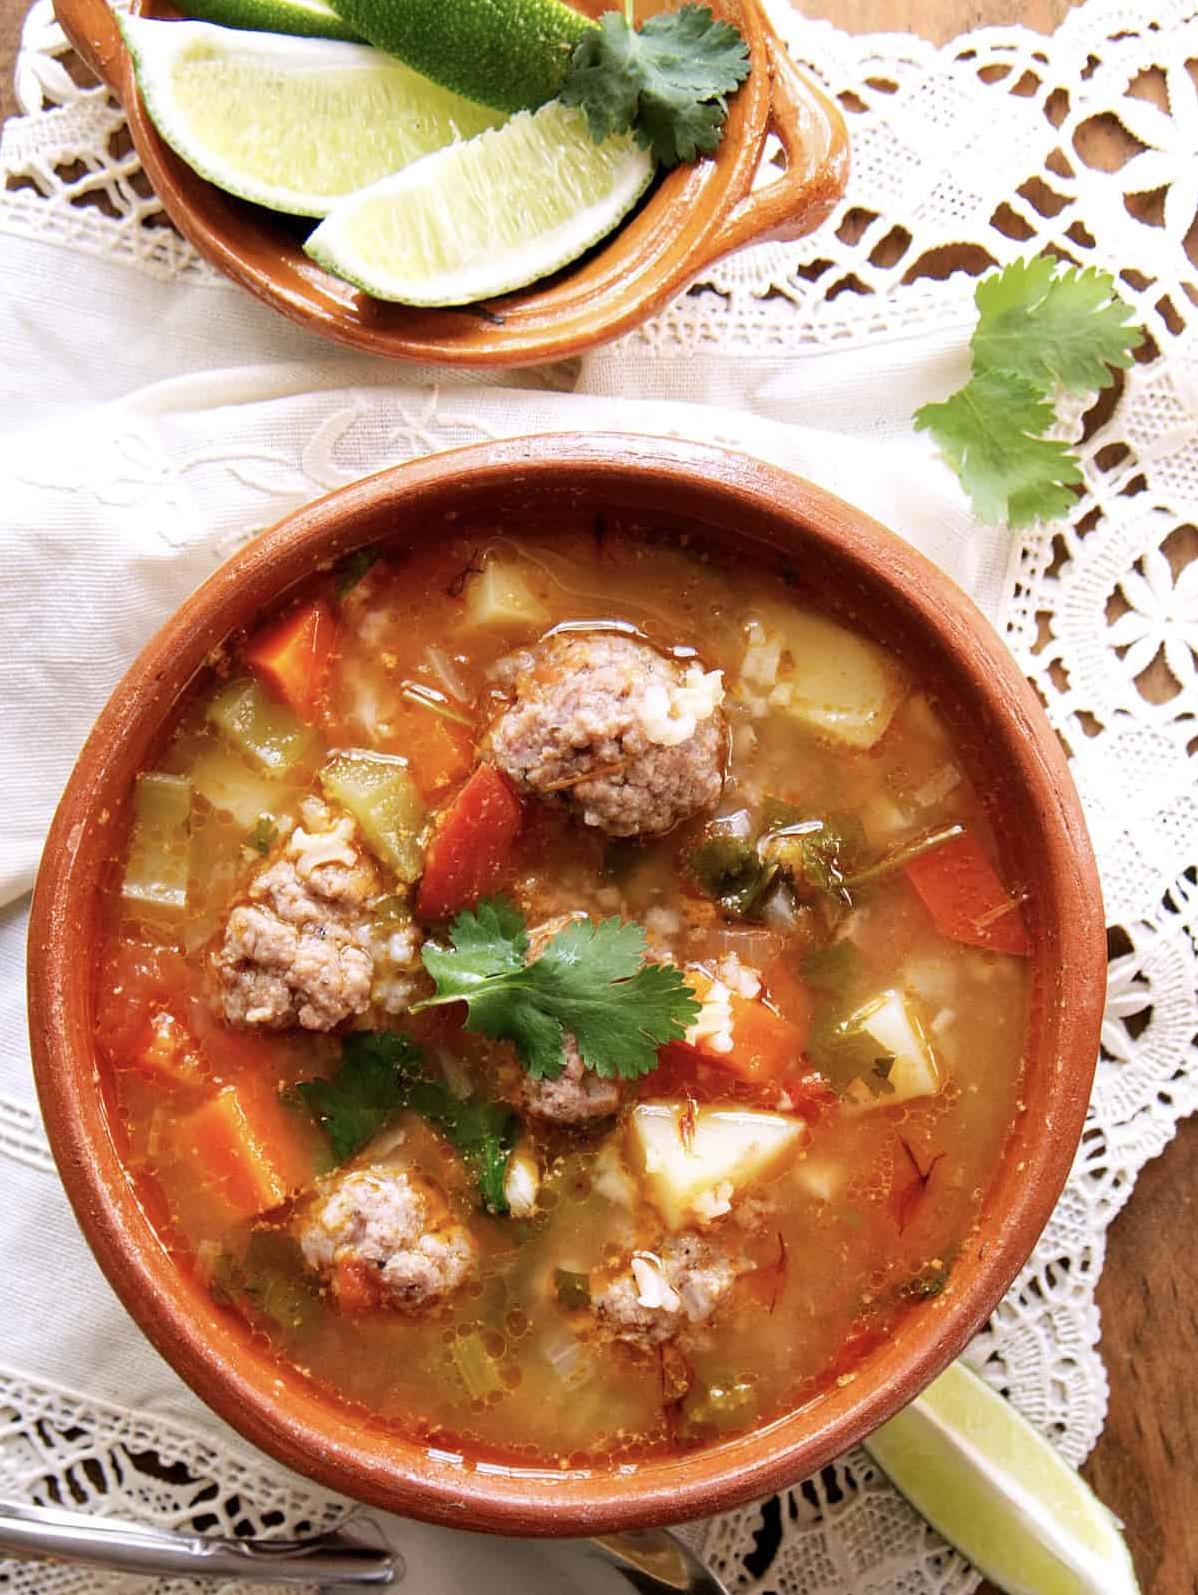  Sopa de Albondigas, the ultimate comfort food